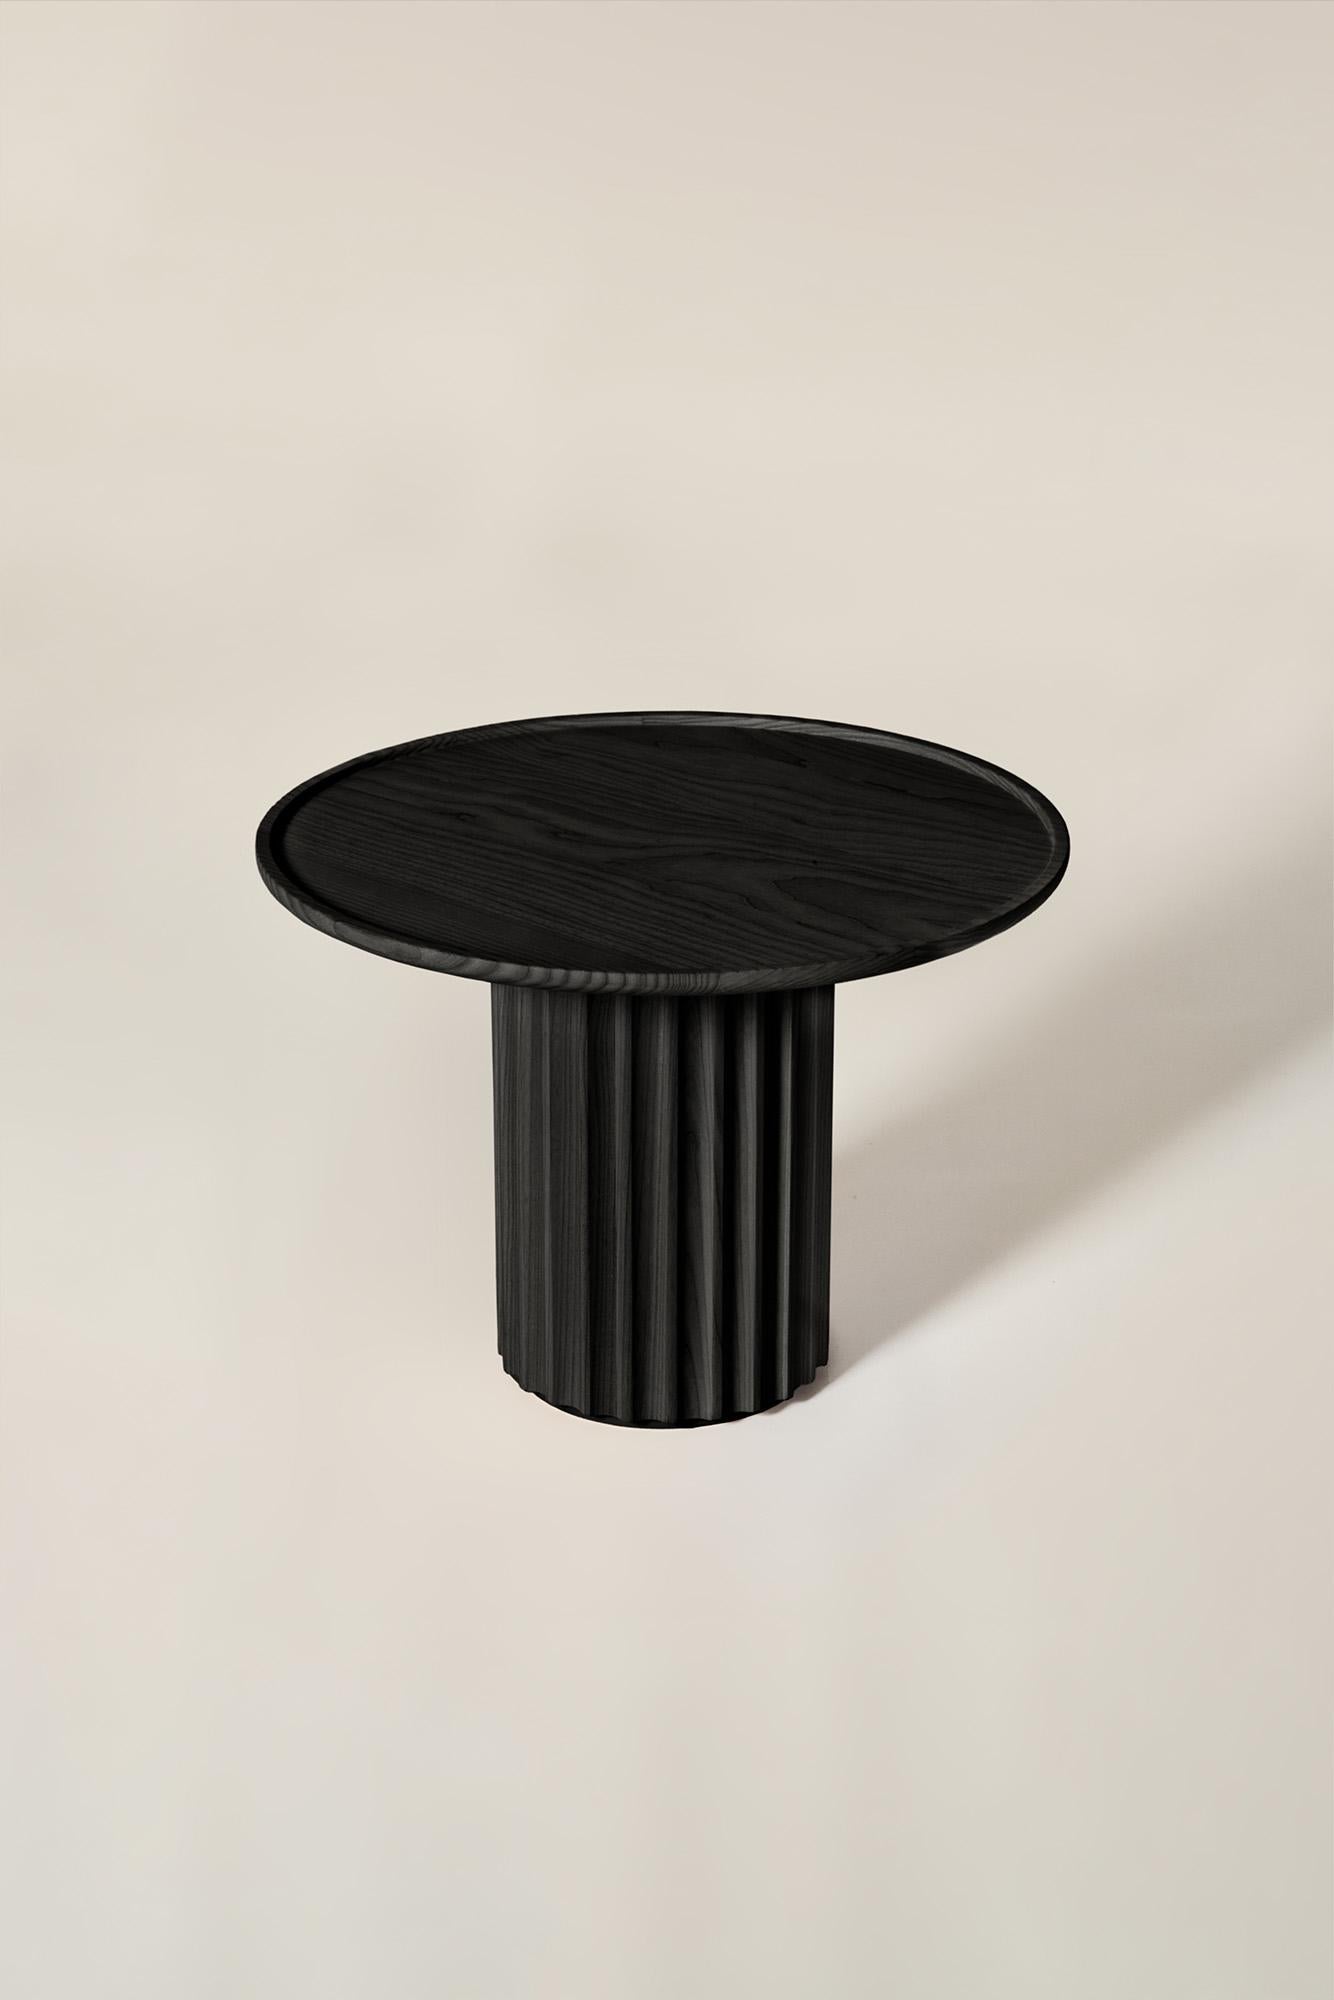 italien Table basse Capitello en bois massif, finition frêne noir, contemporaine en vente